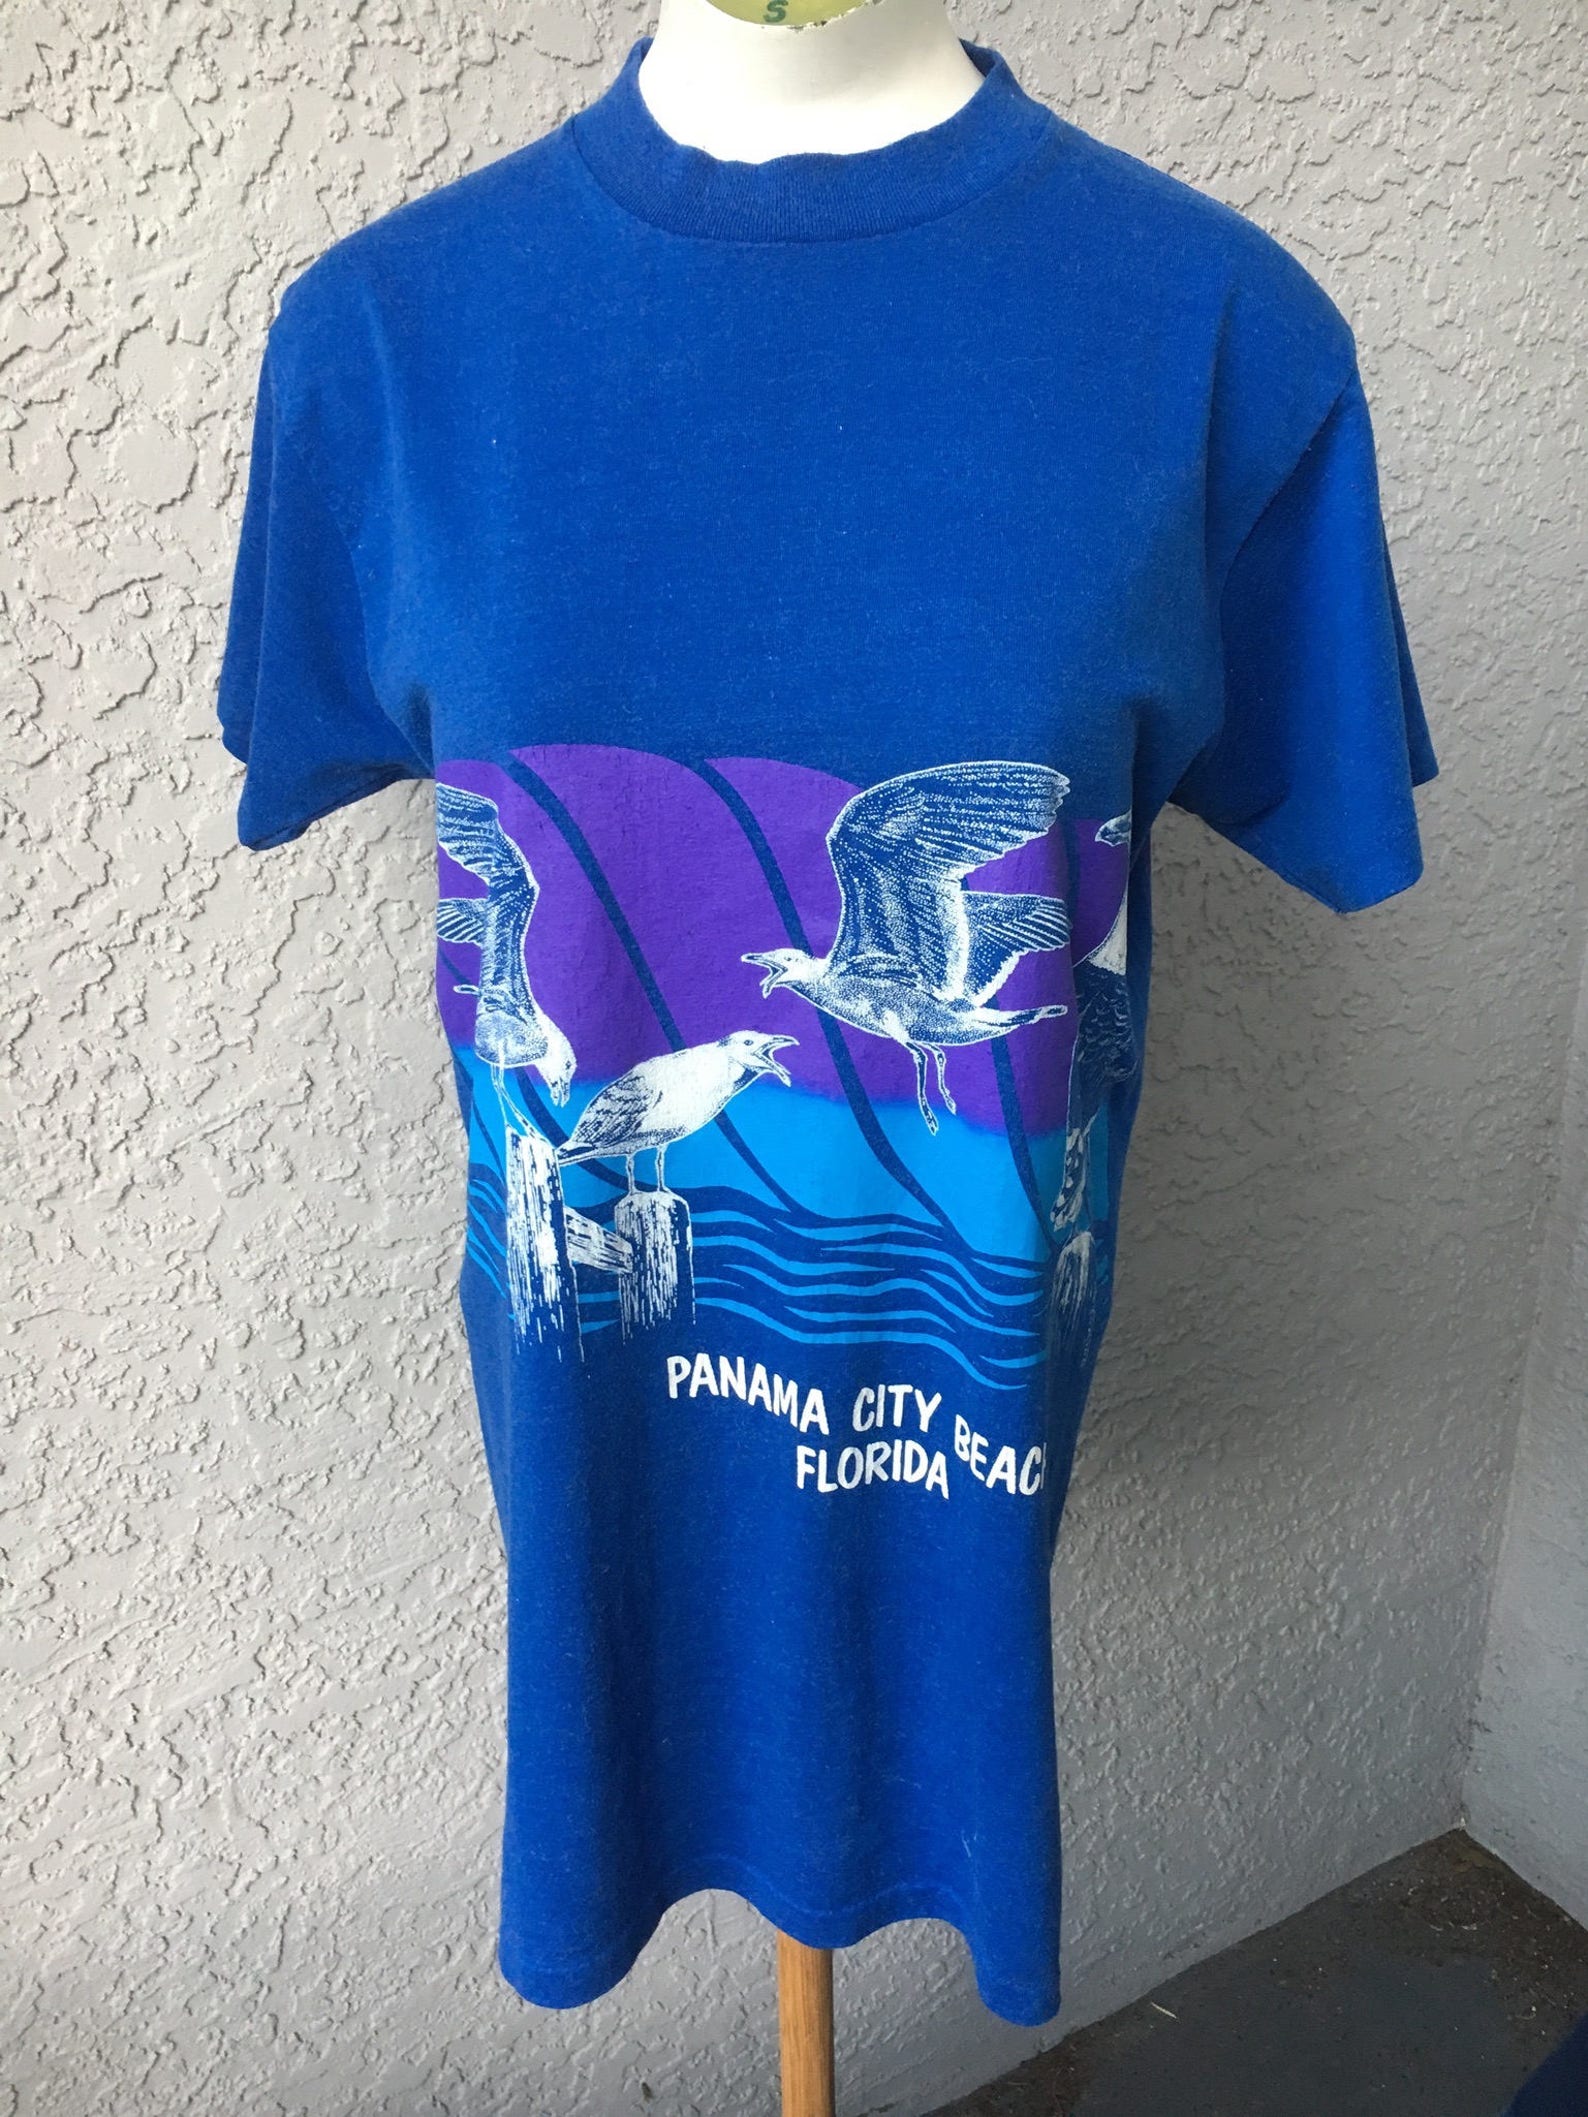 Panama City Beach 1980s Vintage Tee Shirt Size Medium - Etsy